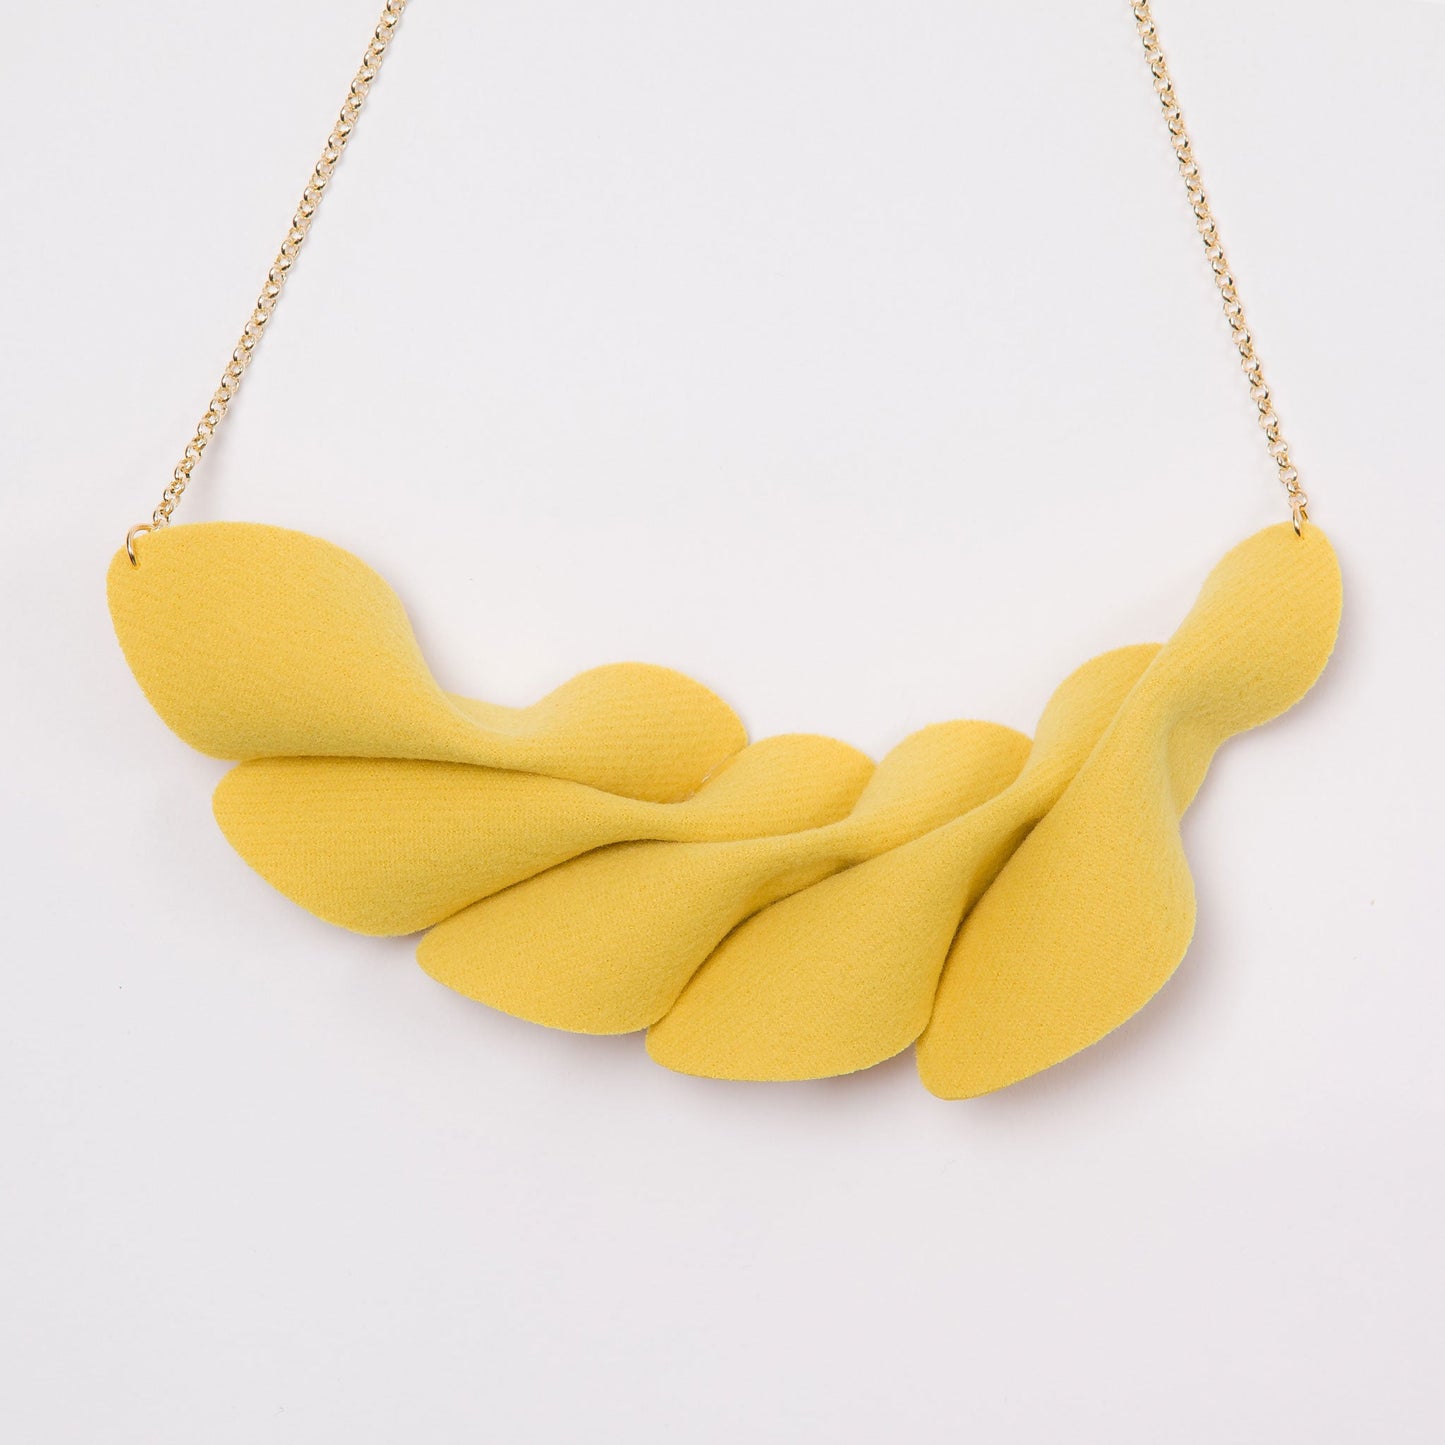 Leaflets Necklace (Mustard)